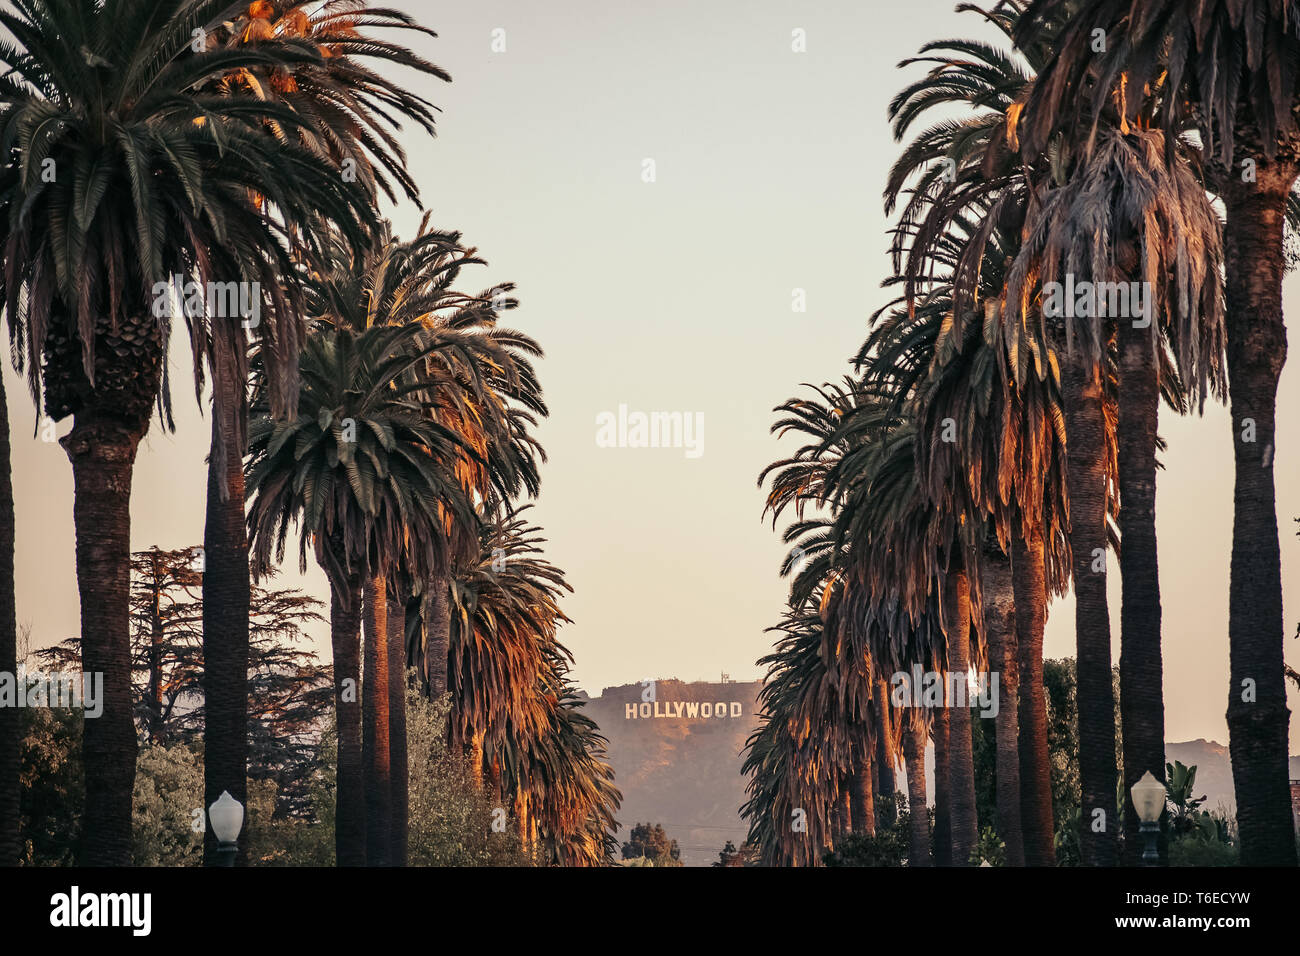 HOLLYWOOD sign, rodeada de palmeras. Mundo famoso monumento. Los Ángeles, California, Estados Unidos. Foto de stock